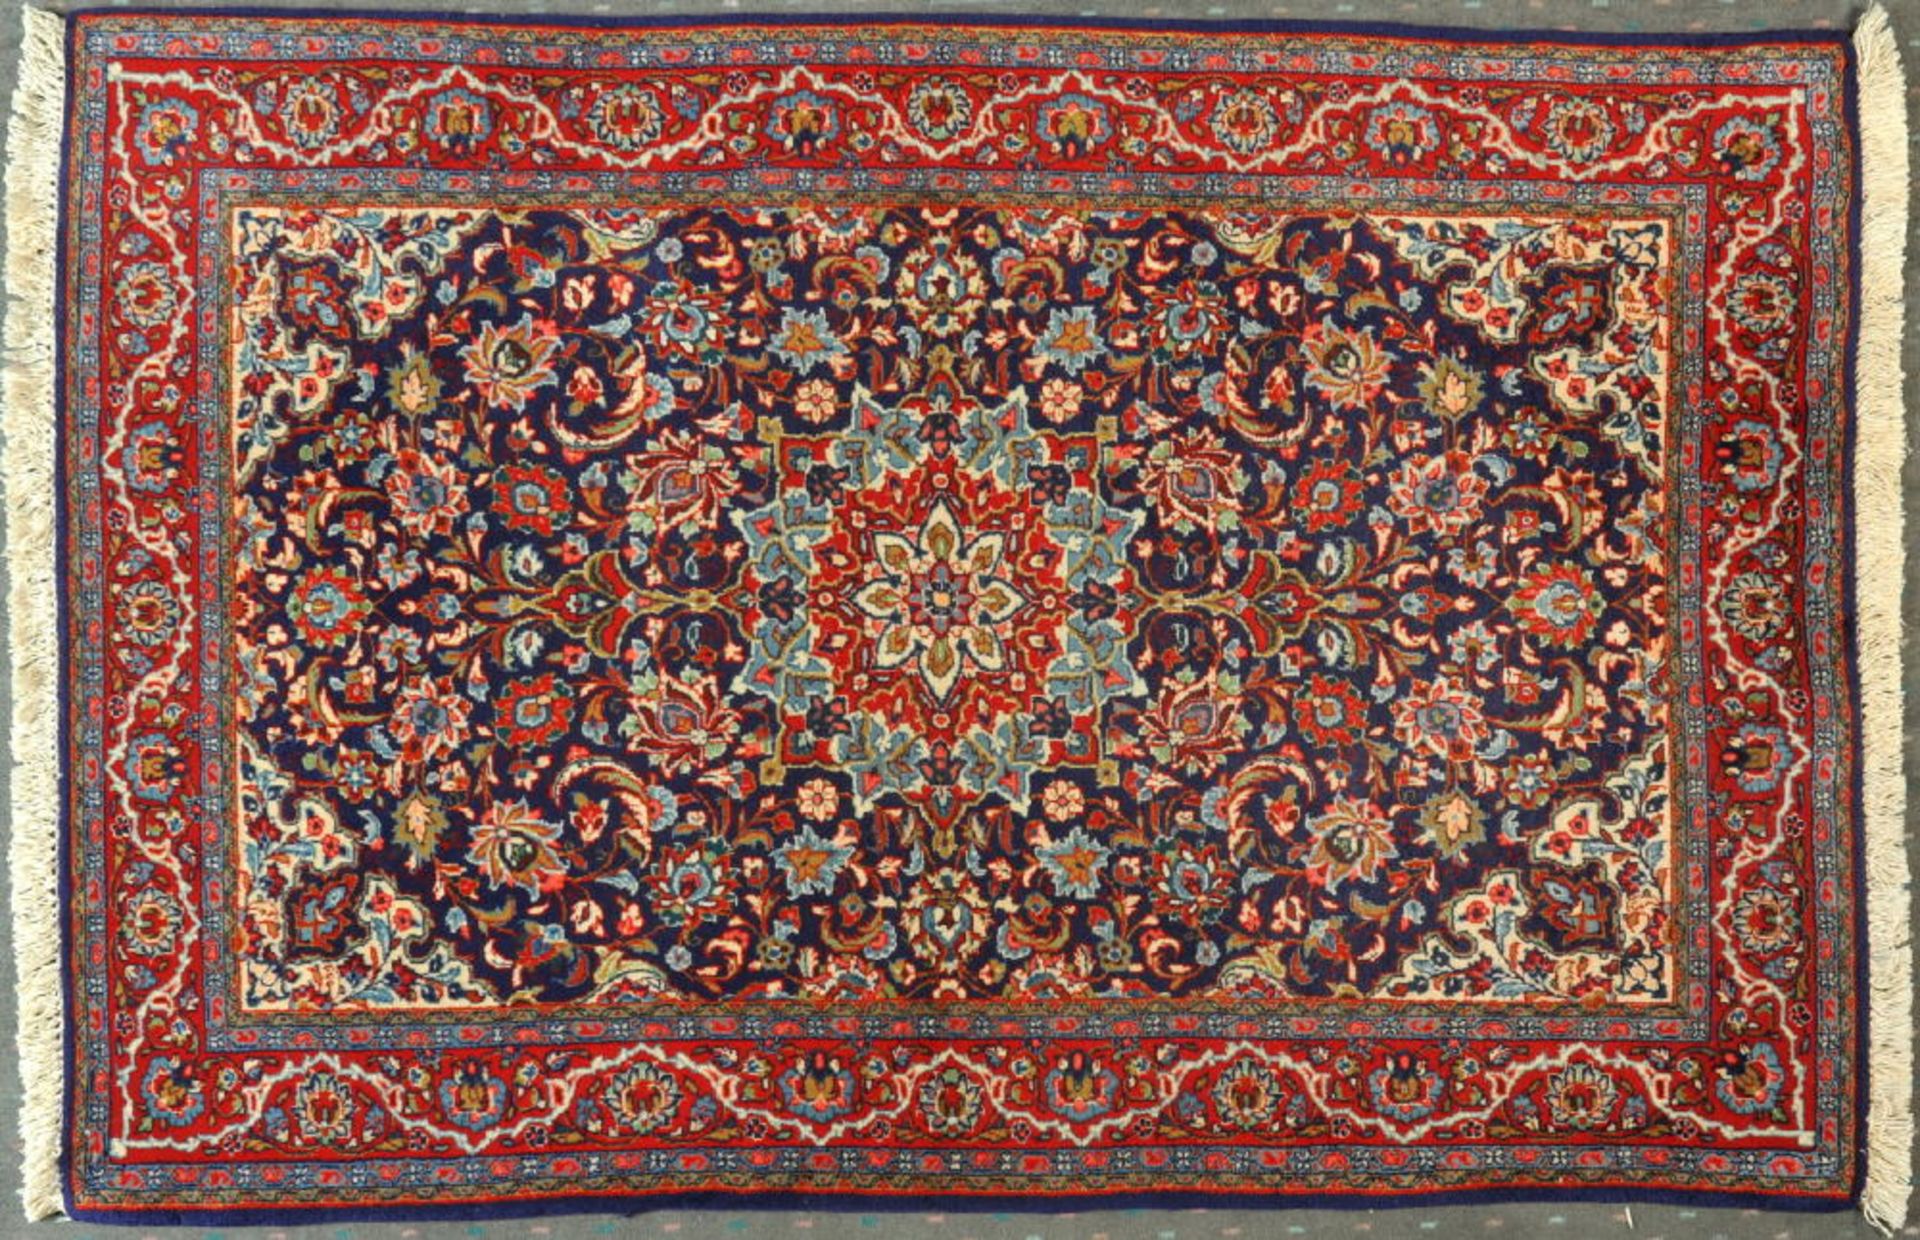 Kork-Sarough, Persien, 104 x 150 cmälter, Korkwolle, sehr feine Knüpfung, dunkelblaugrundig,